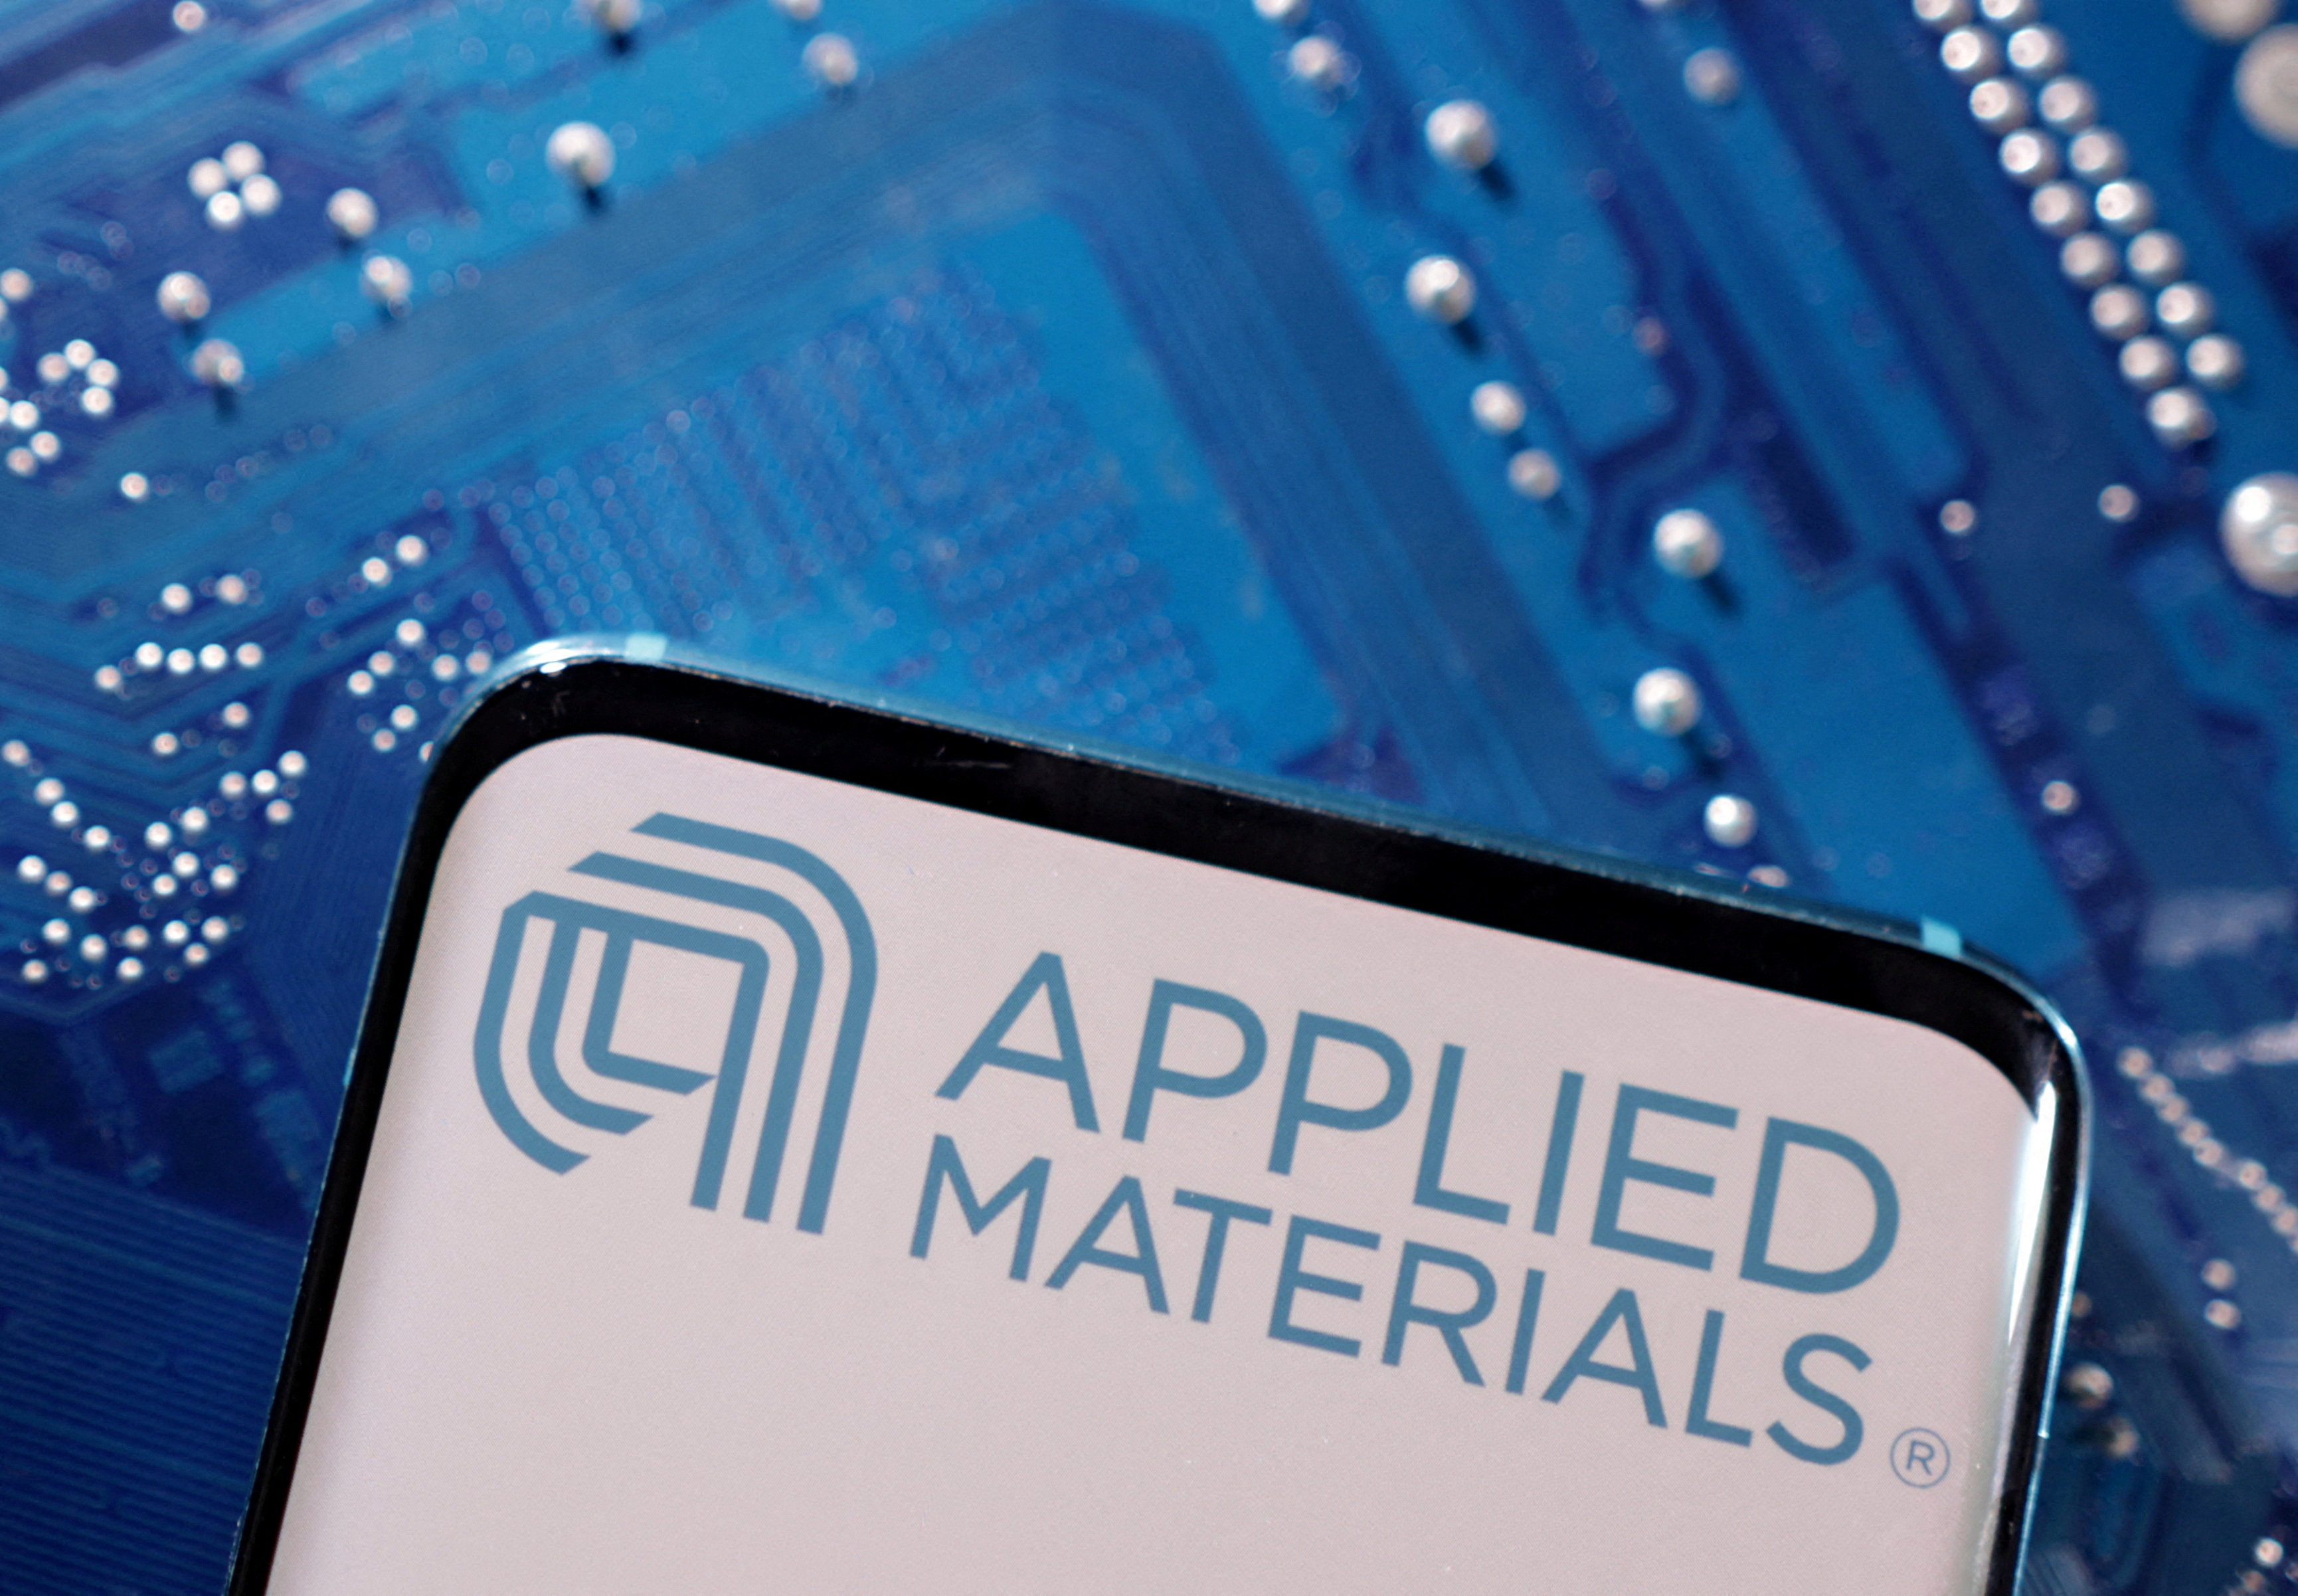 Illustration shows Applied Materials logo